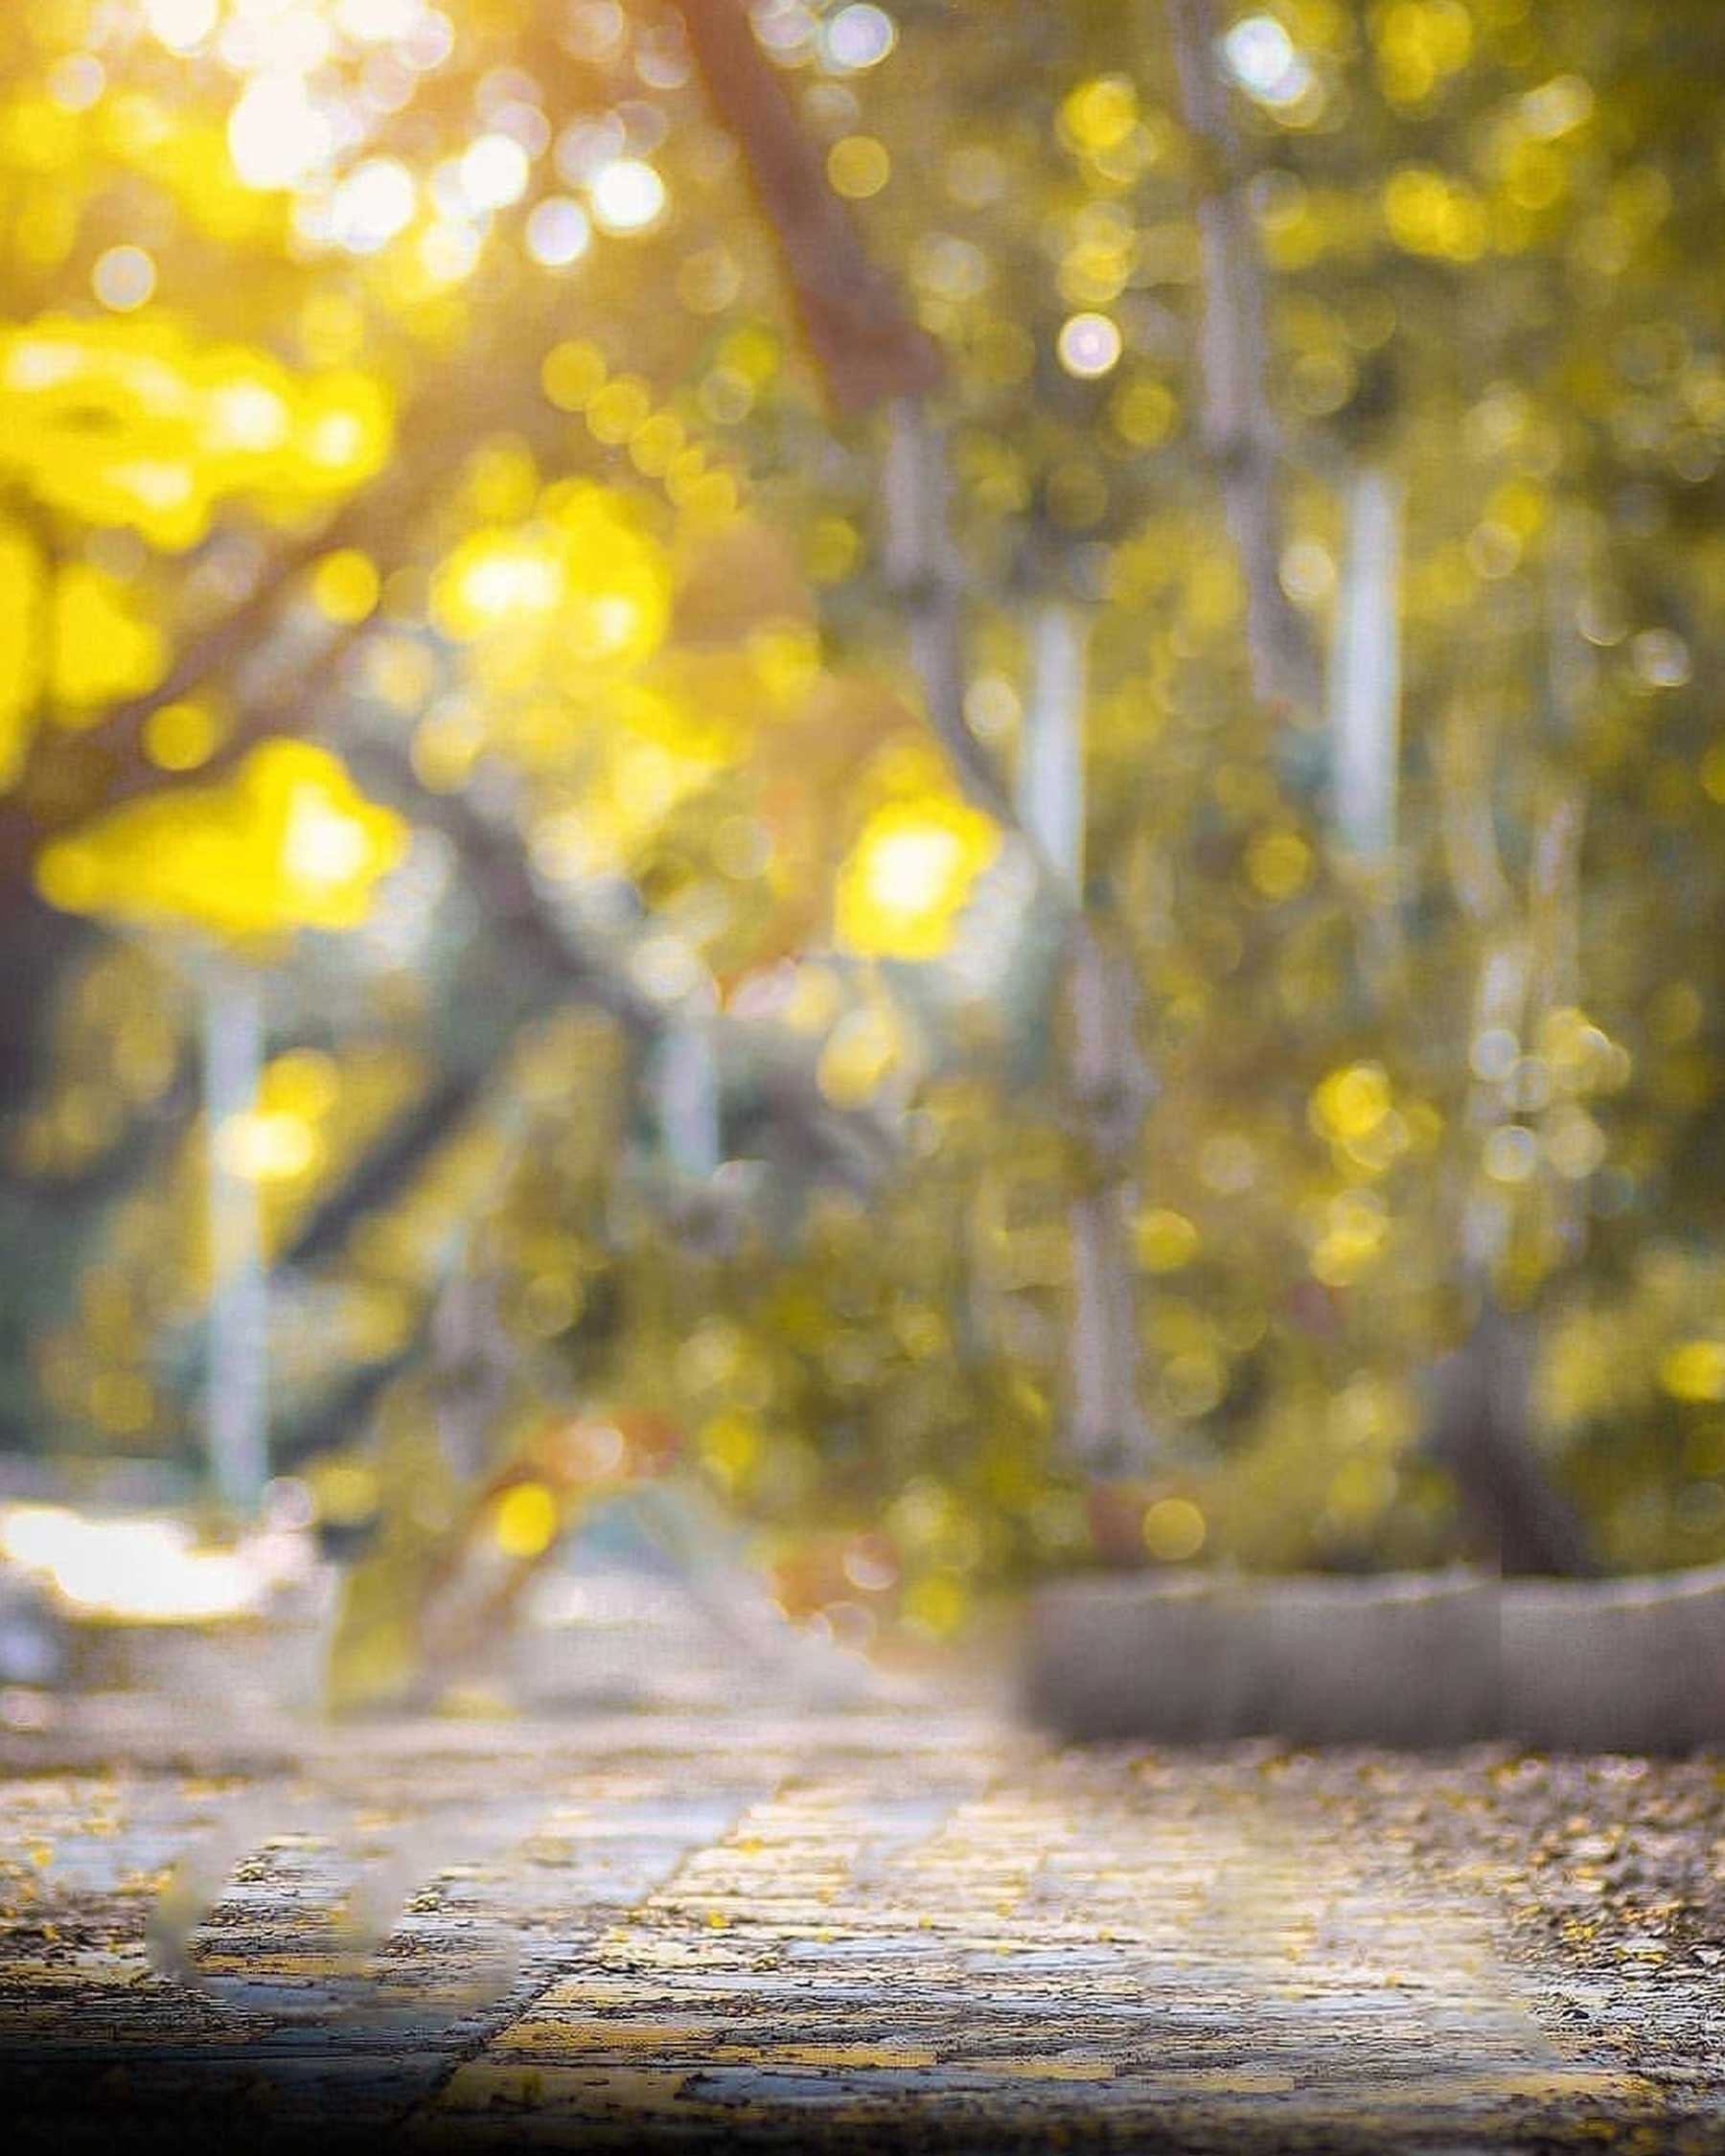 Green Yellow Nature Blur PicsArt Background Free Stock Image